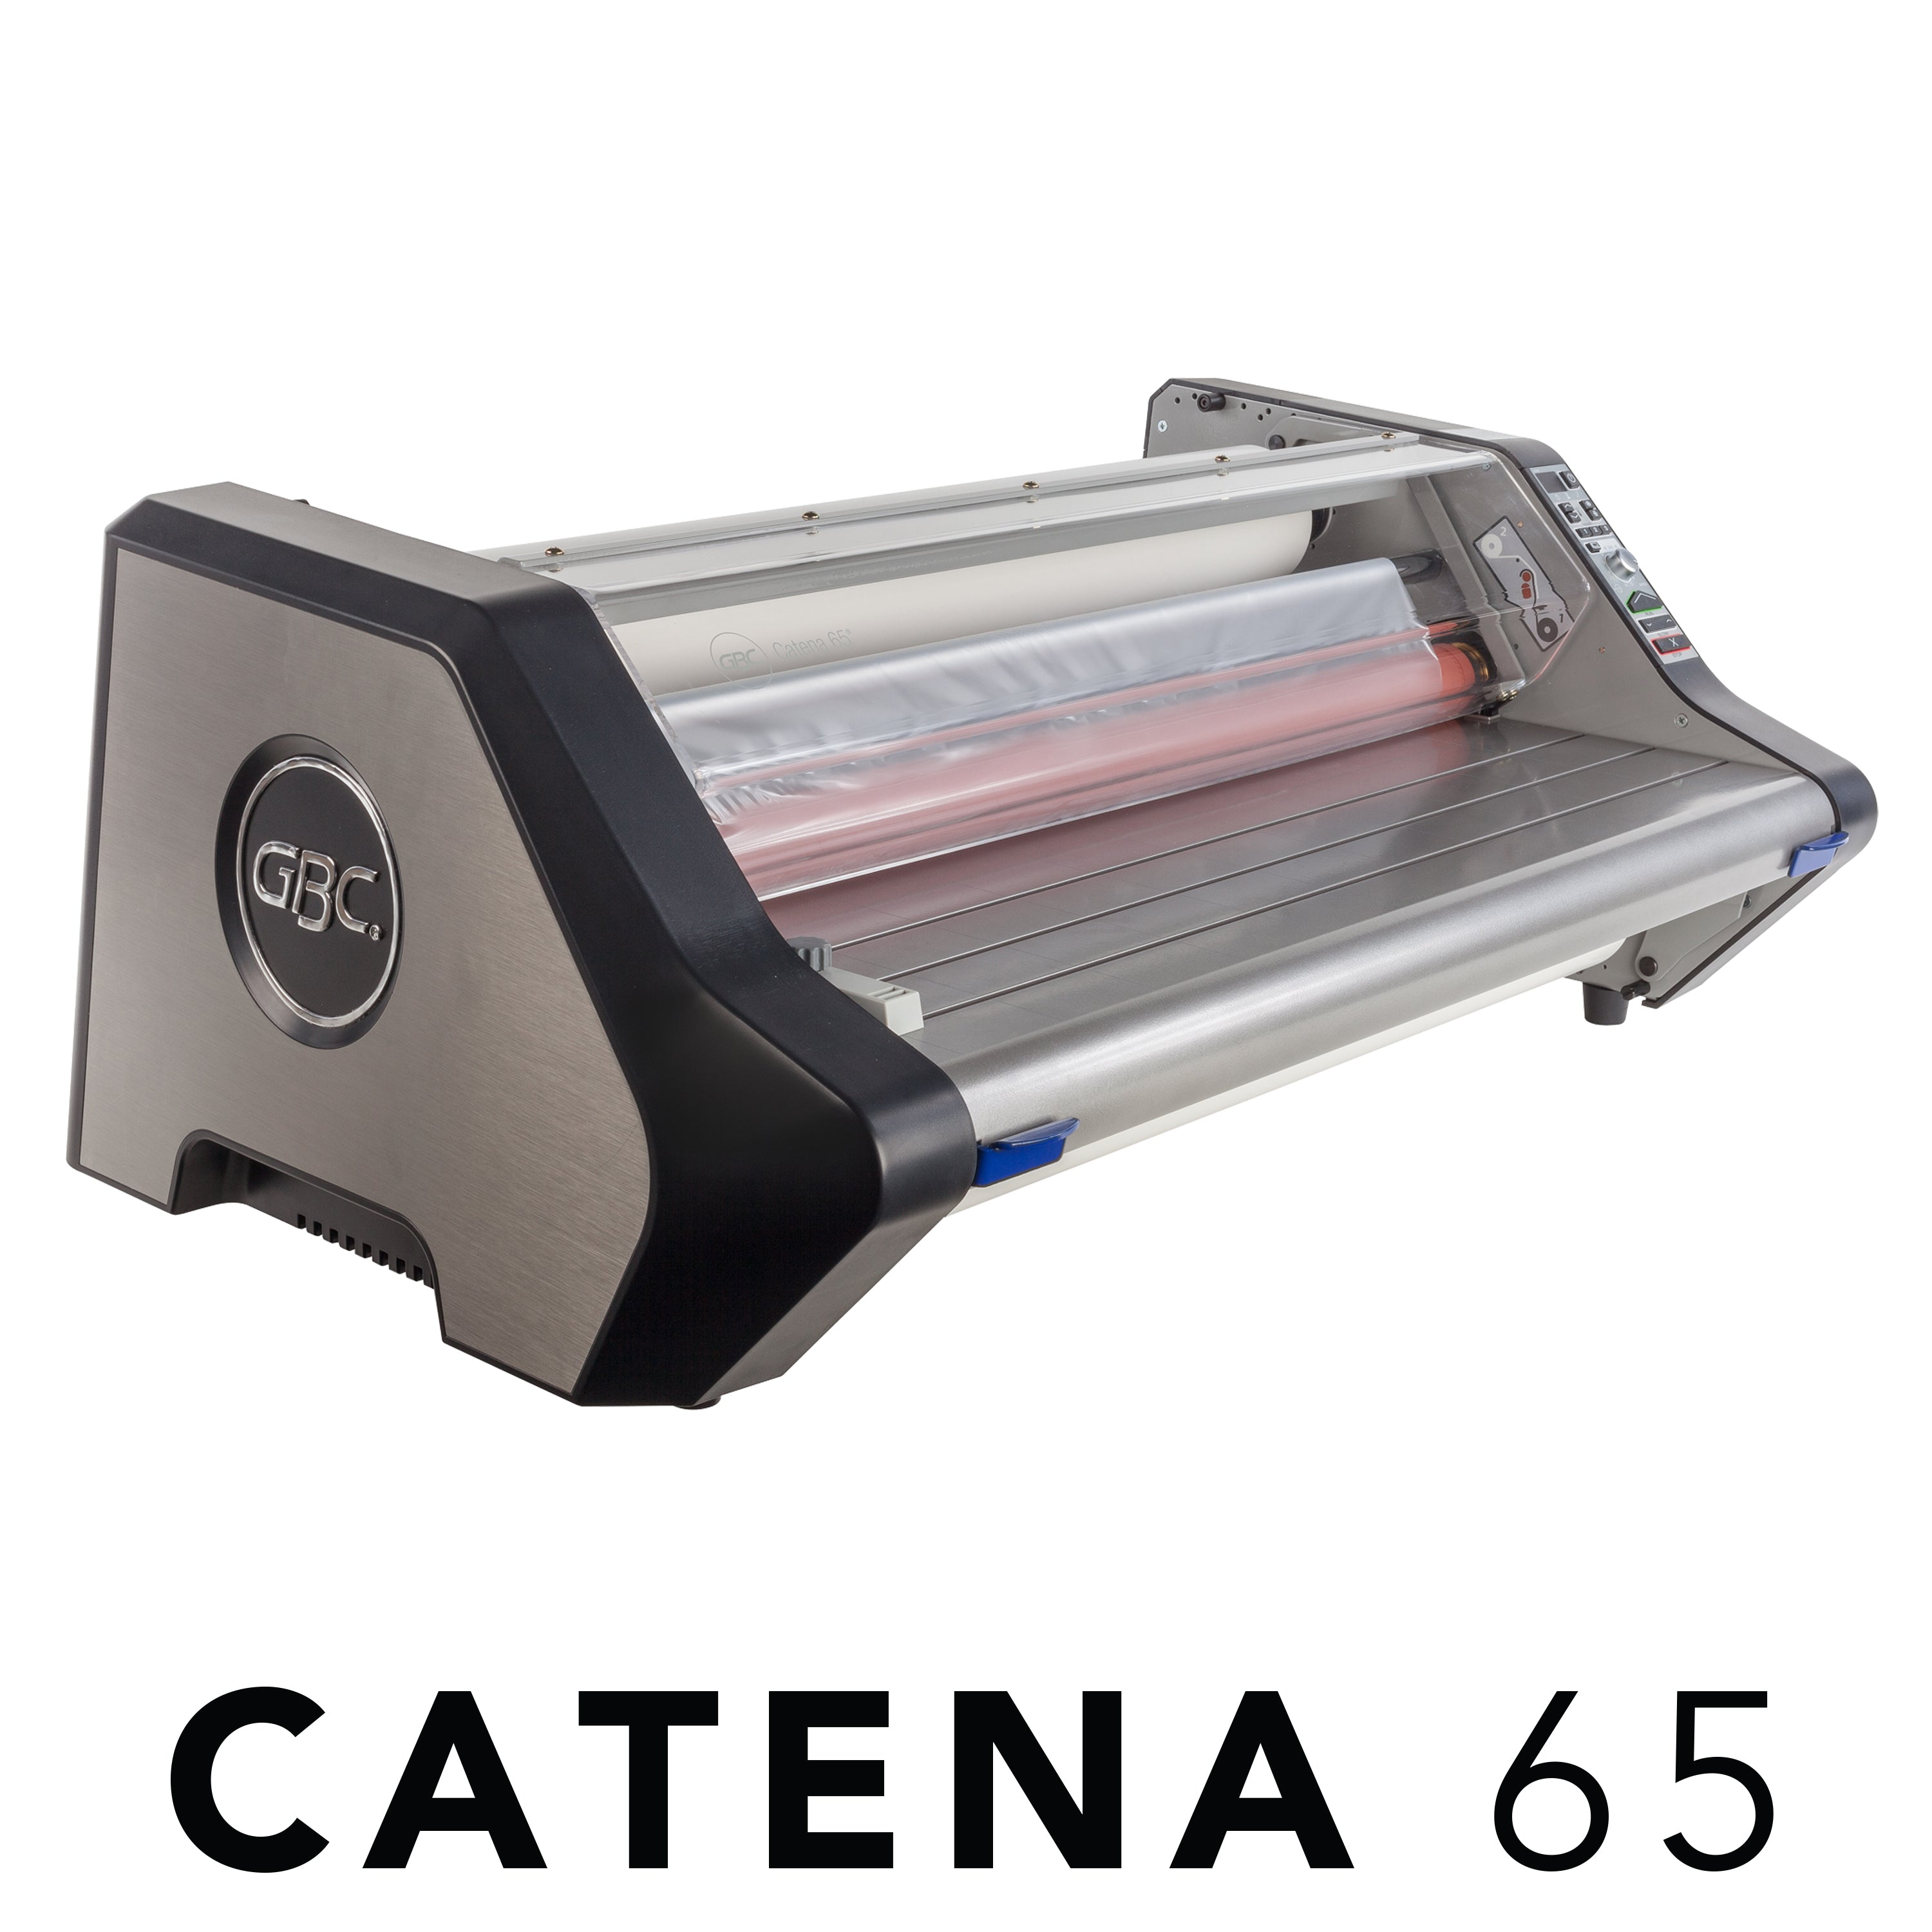 GBC Catena 65 Thermal Roll Laminator